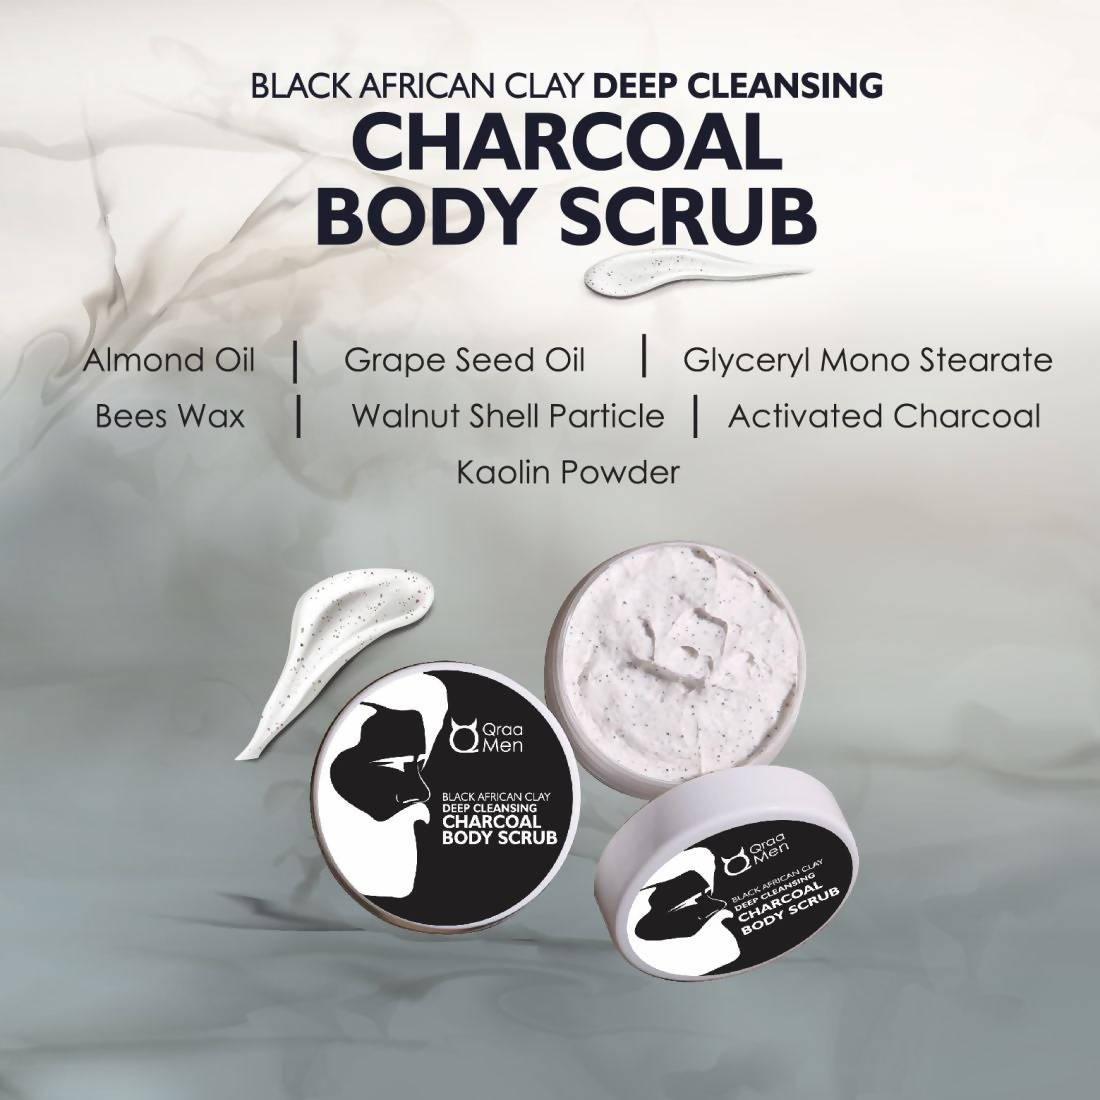 Qraa Men Black African Clay Deep Cleansing Charcoal Body Scrub